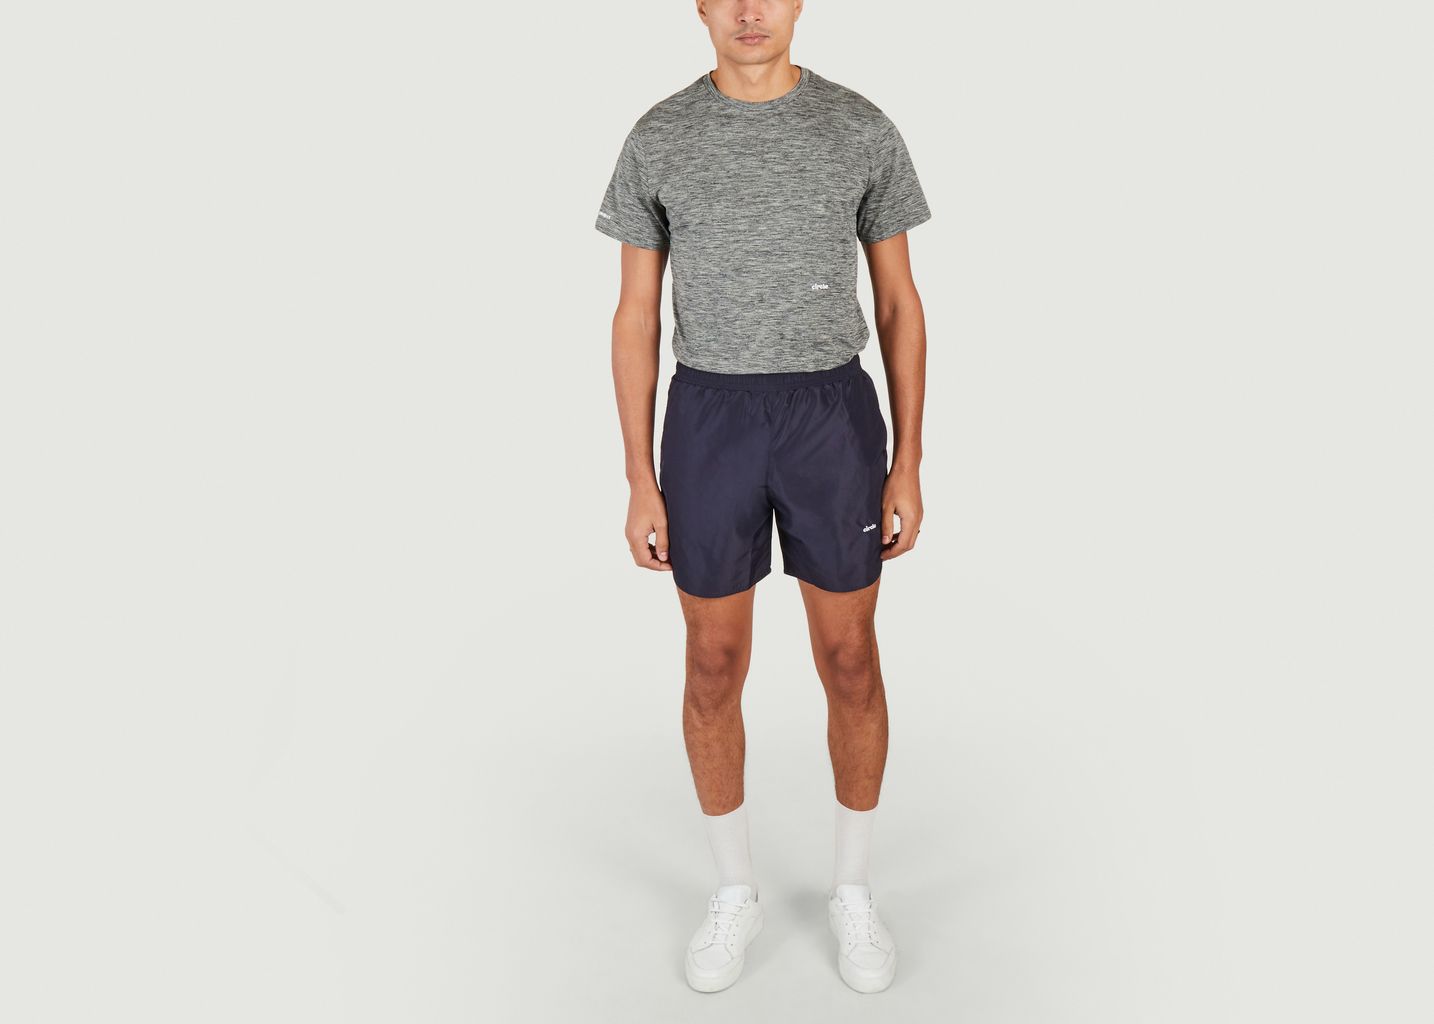 Absolute Shorts - Circle Sportswear